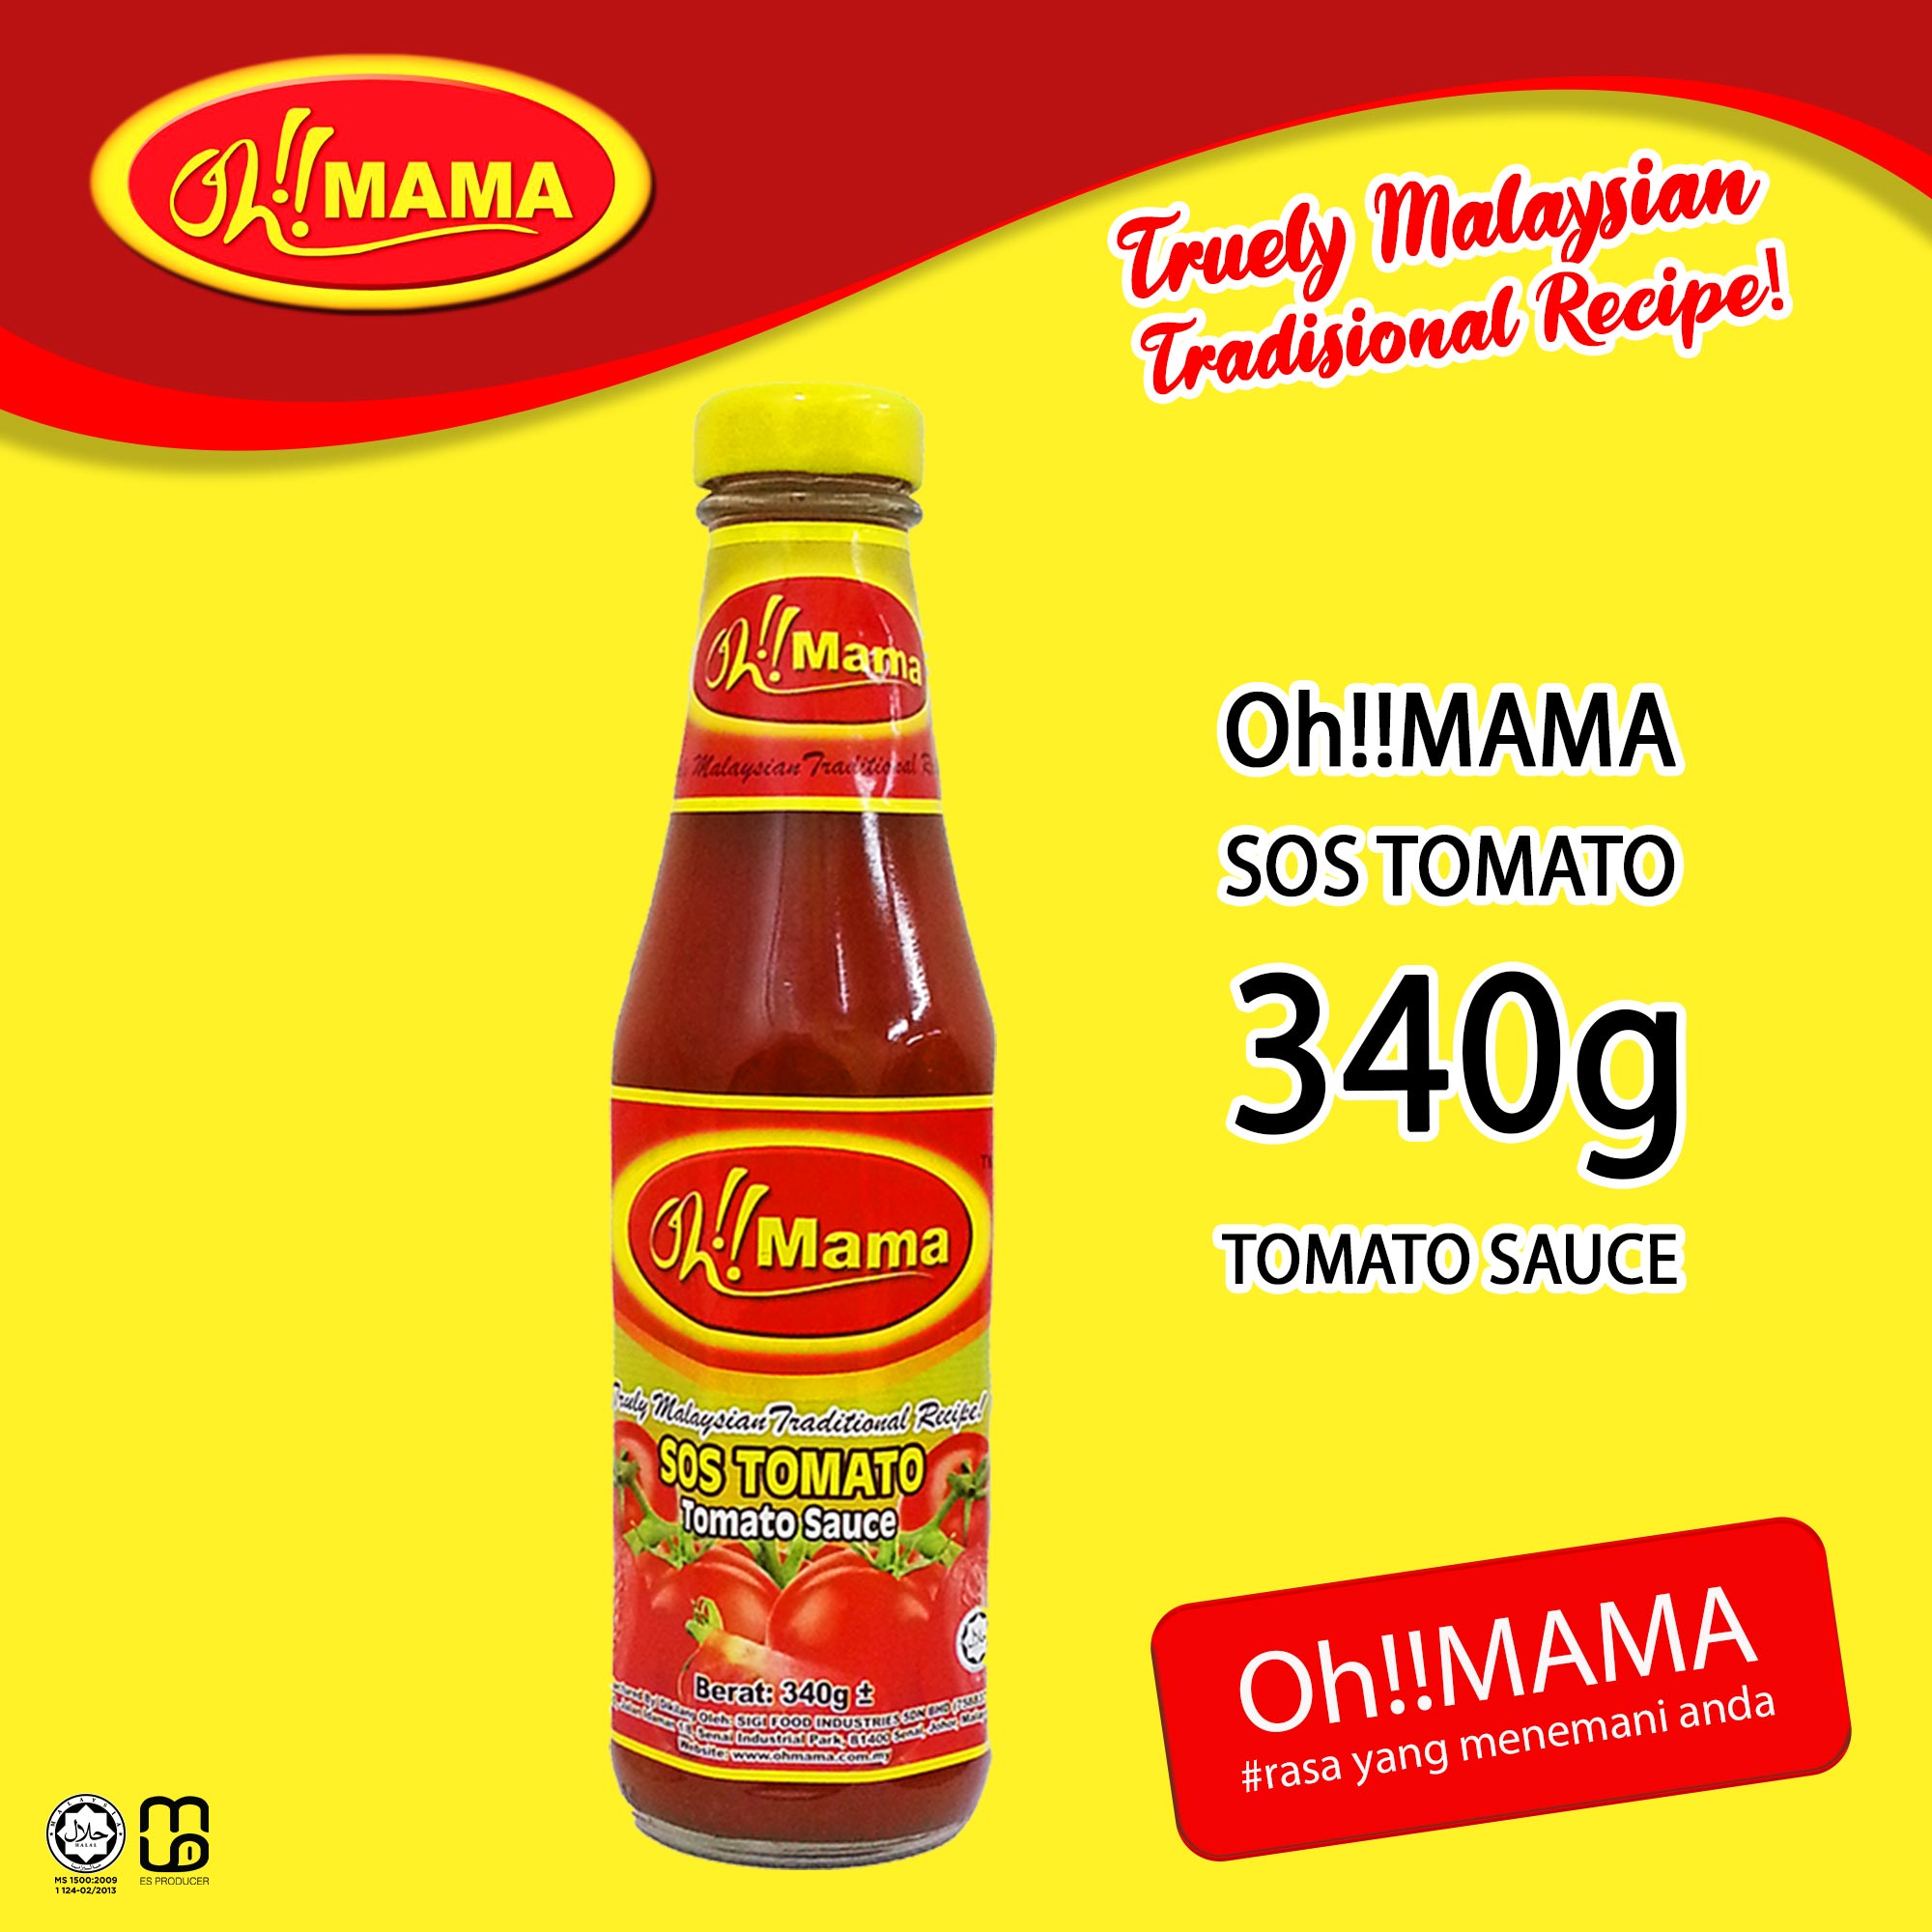 Oh!!MAMA Tomato Sauce 340g